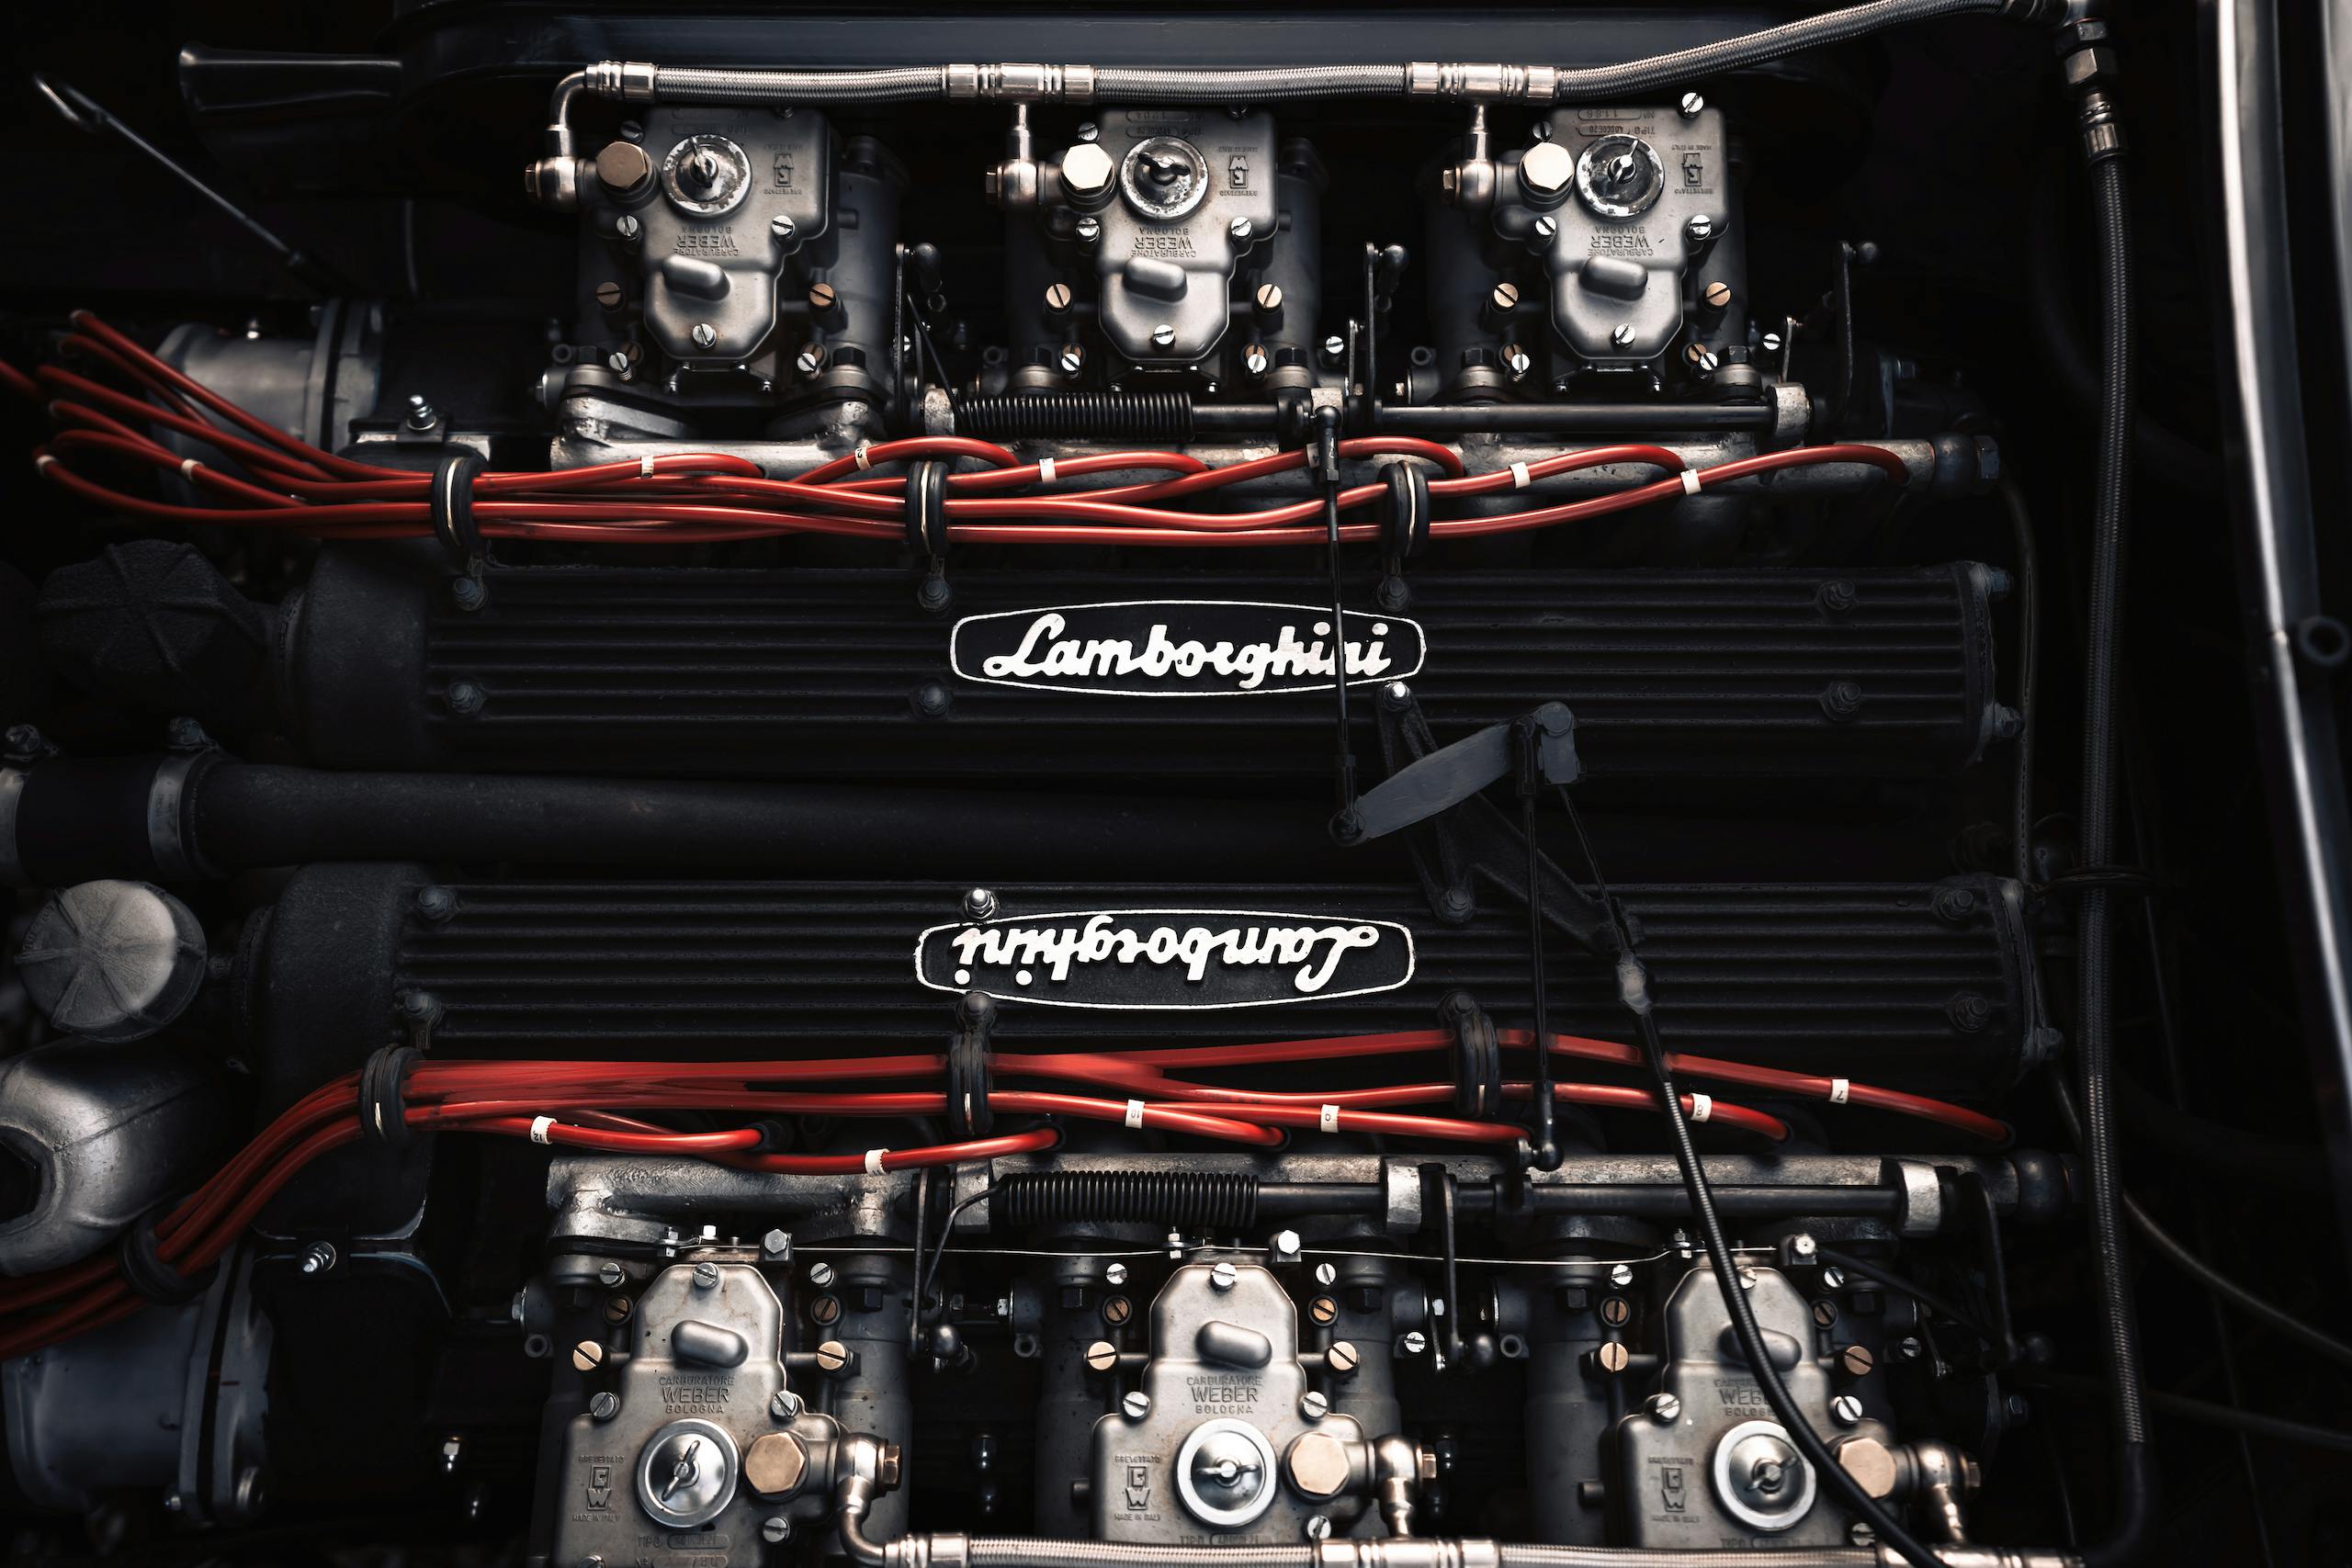 Lamborghini 400 GT engine top closeup